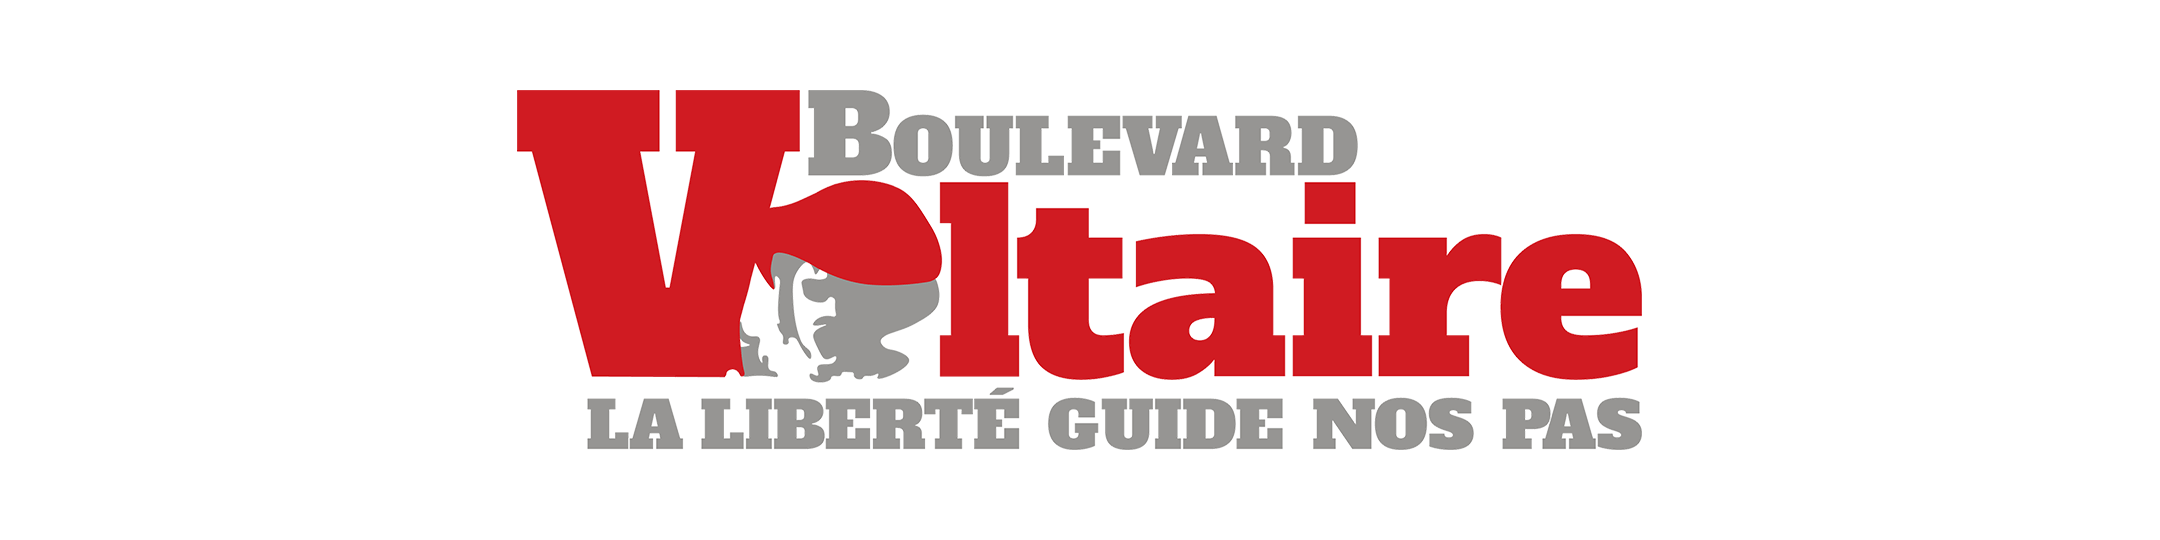 BOULEVARD VOLTAIRE-2